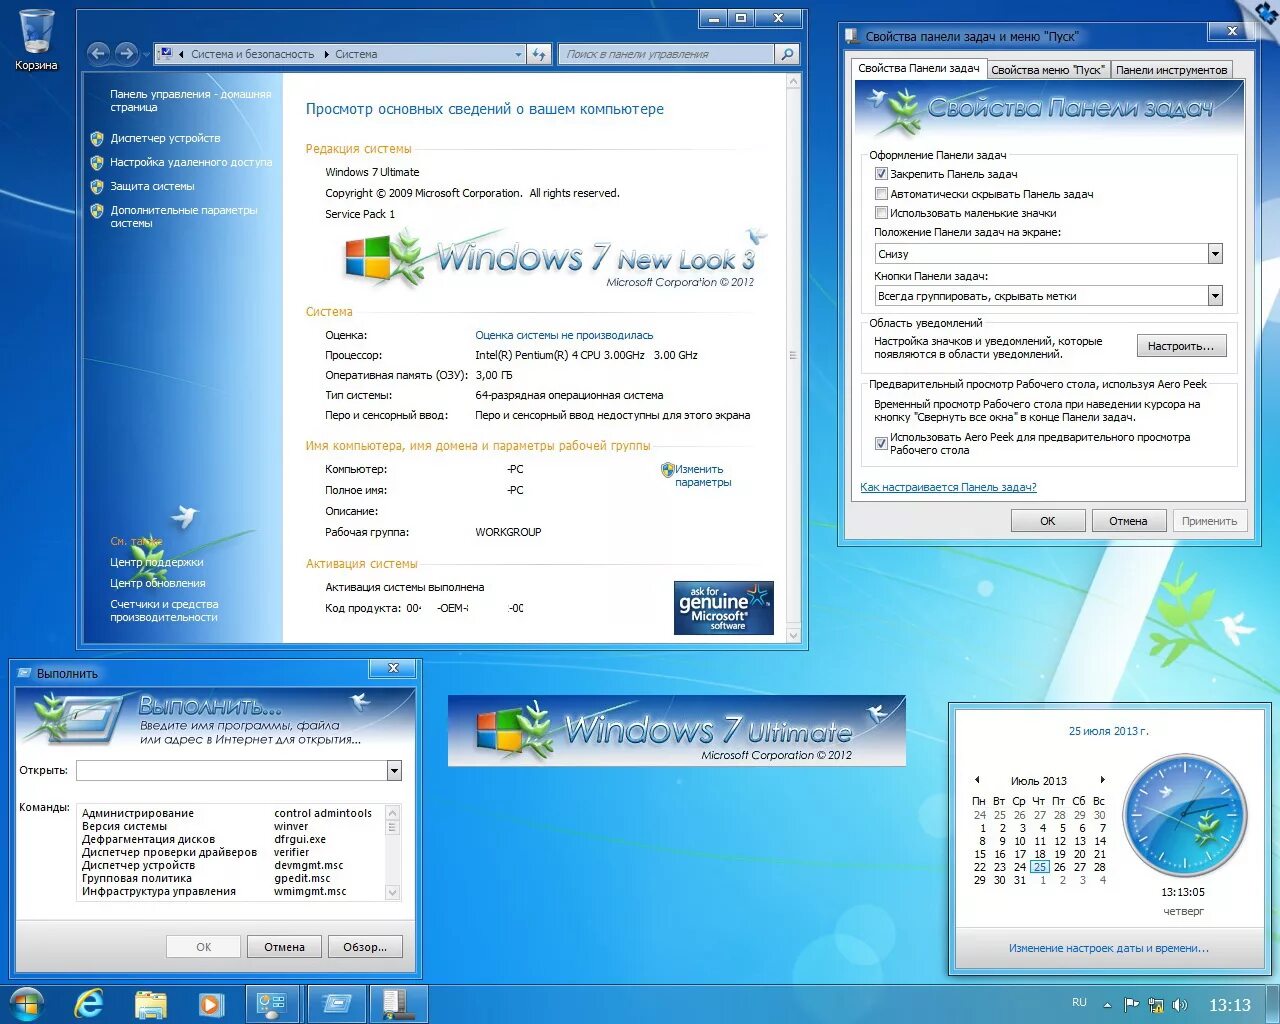 Windows 7 New look 3. Windows 7 Ultimate New look. Пакет оформления для Windows 7. Windows 7 New look nbook v16.06.23" от Smarty.